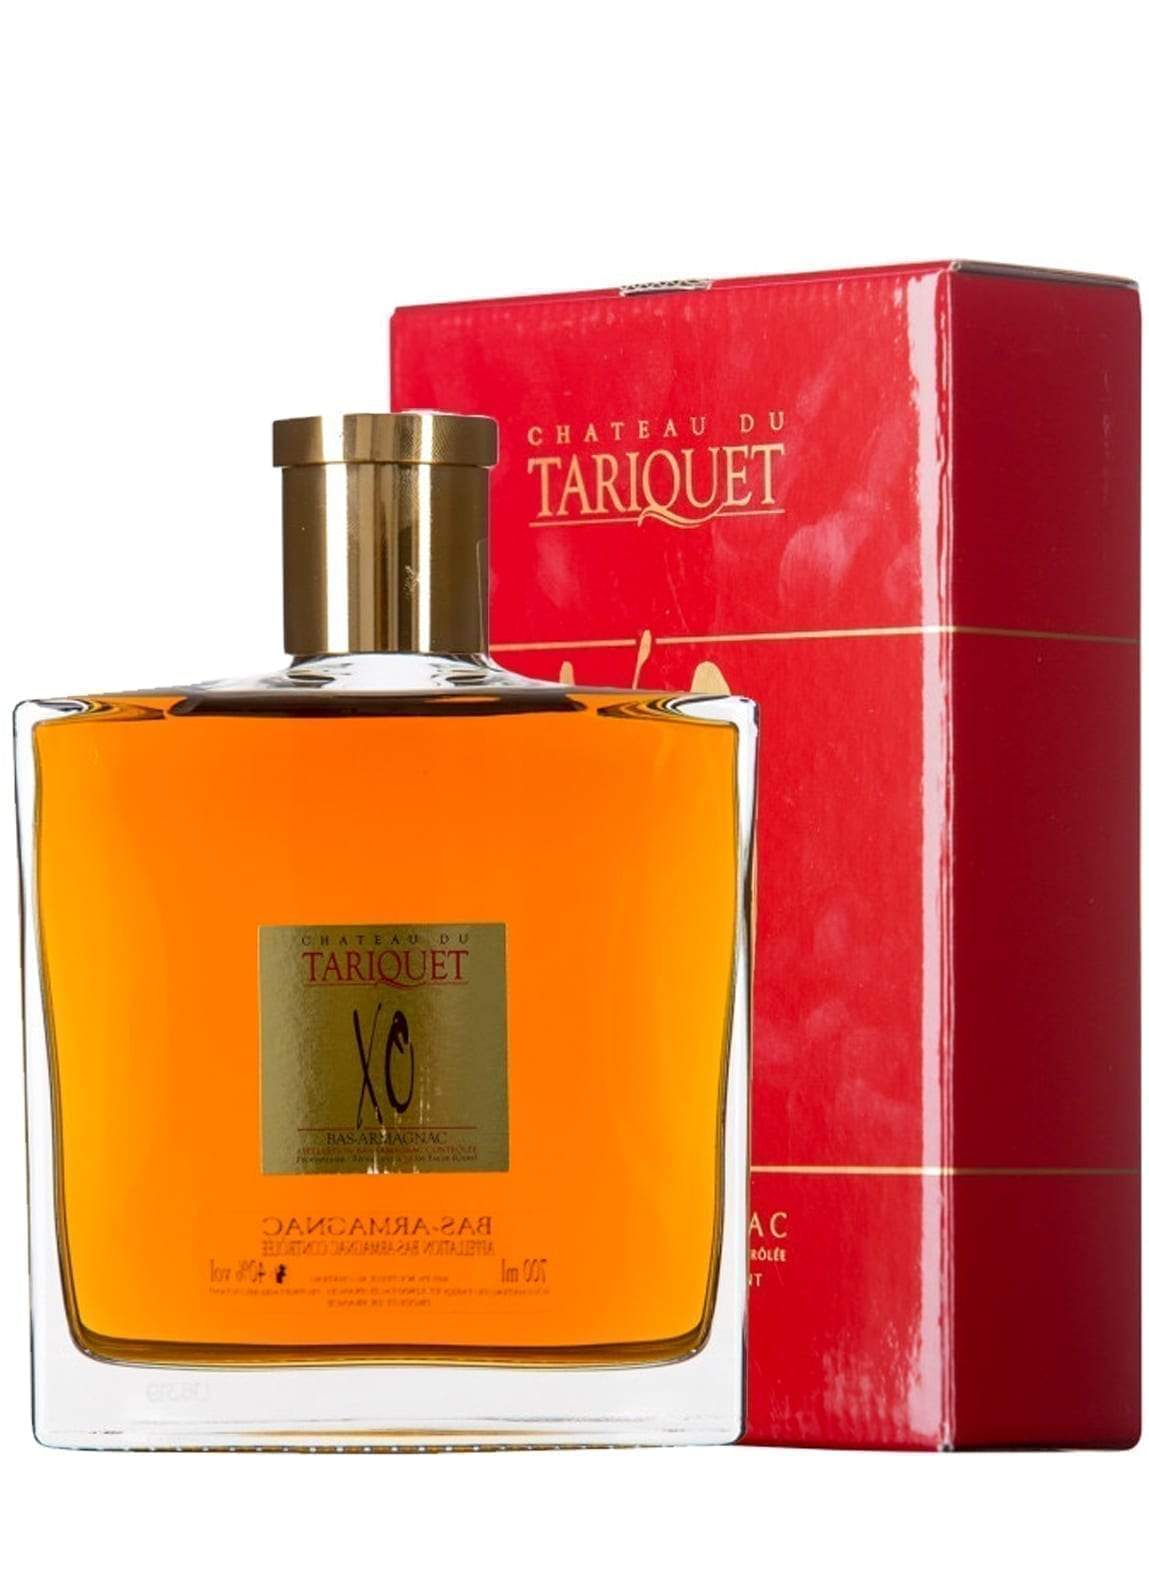 Domaine du Tariquet Bas Armagnac XO Chance 15 years Carafe 40% 700ml | Brandy | Shop online at Spirits of France